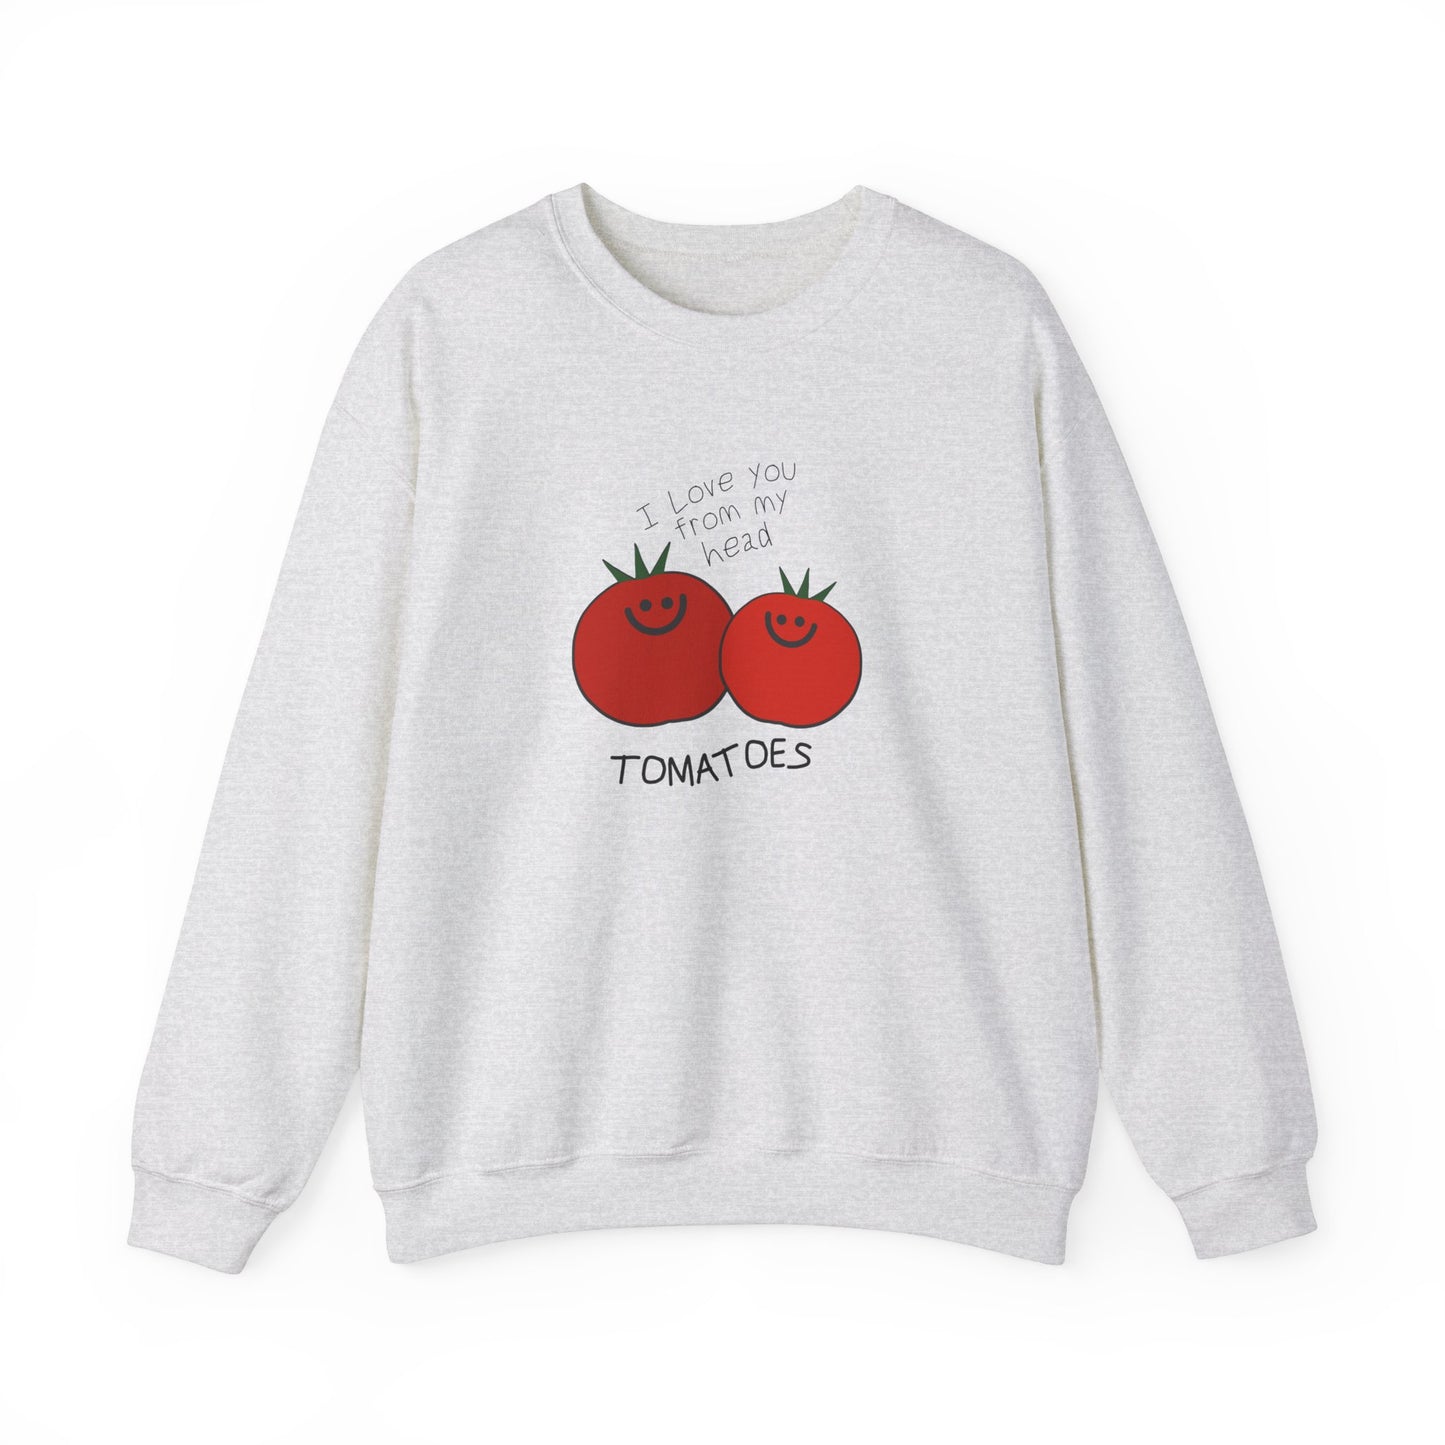 Sweatshirt I love you from my head tomatoes